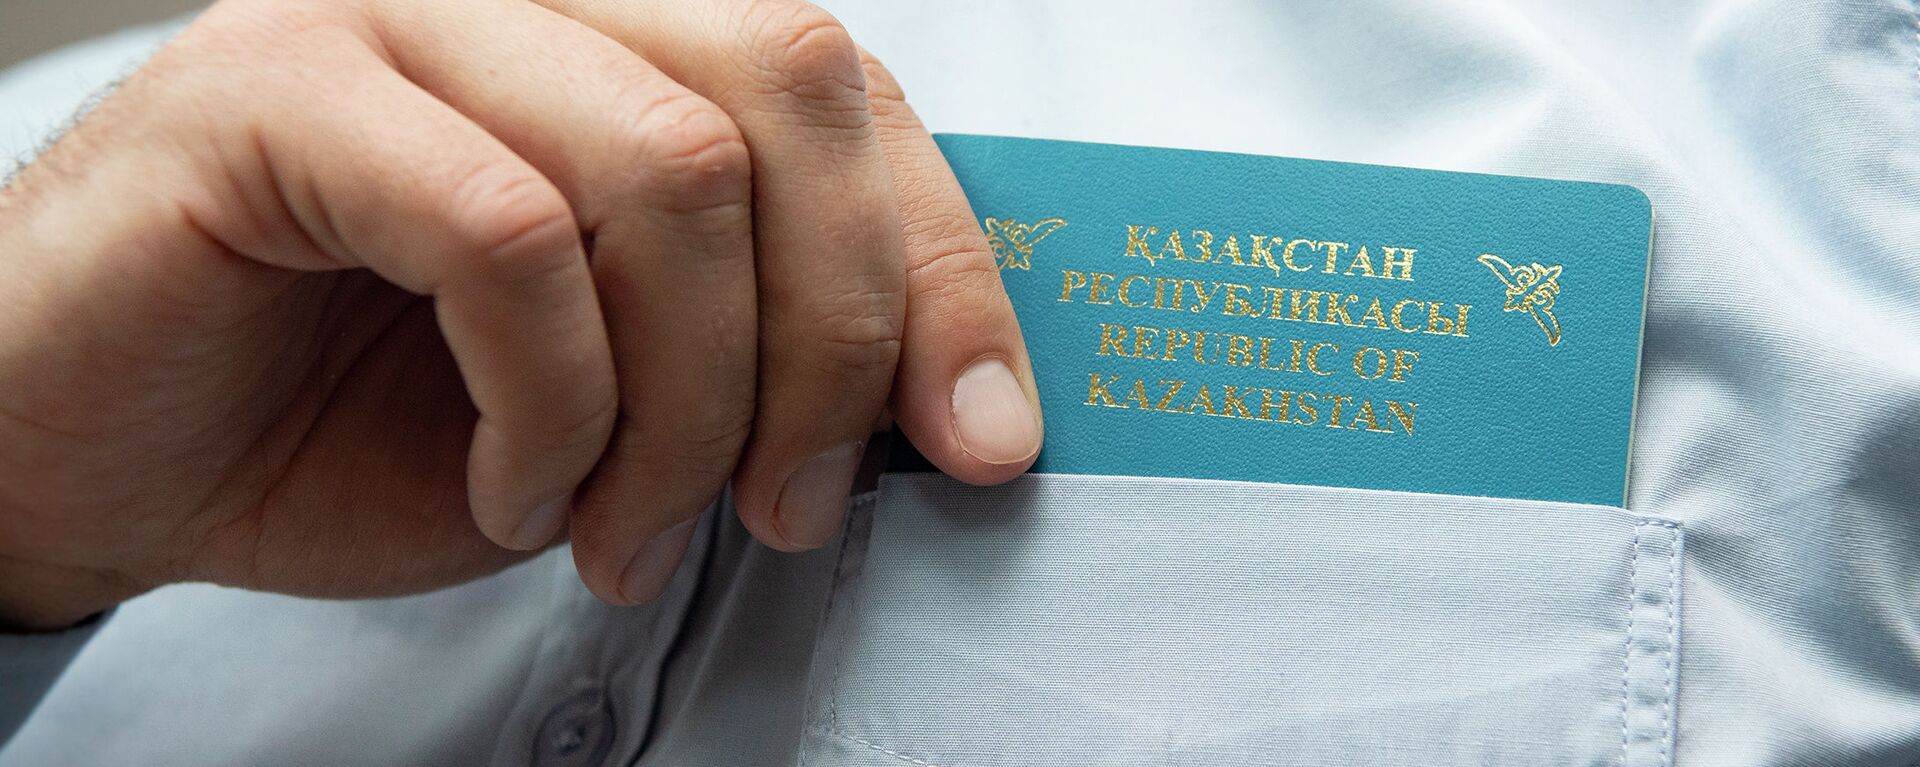 Паспорт гражданина Казахстана - Sputnik Казахстан, 1920, 05.04.2021